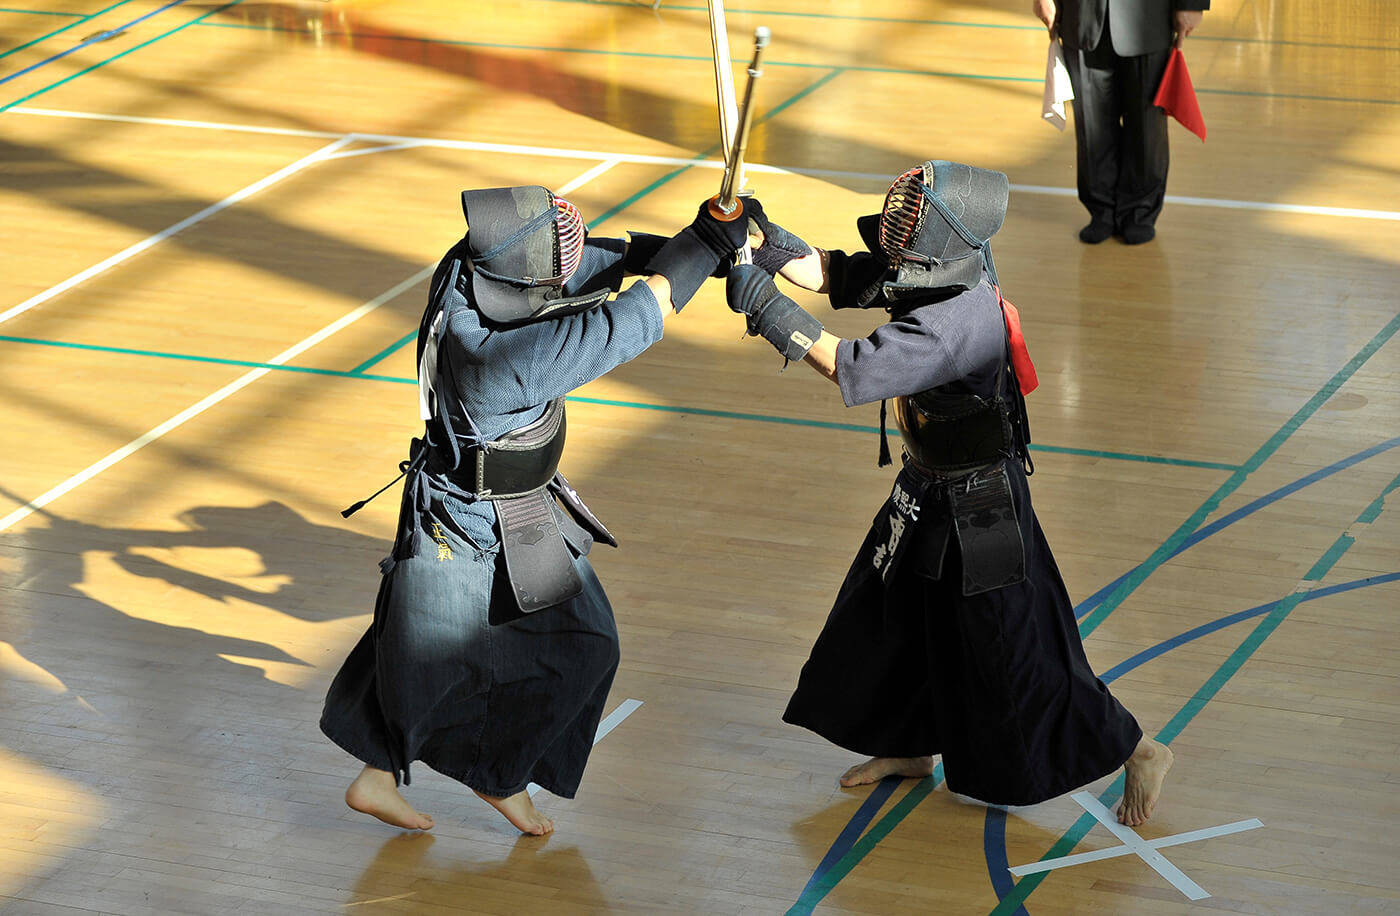 Intense Kendo Battle in Action Wallpaper